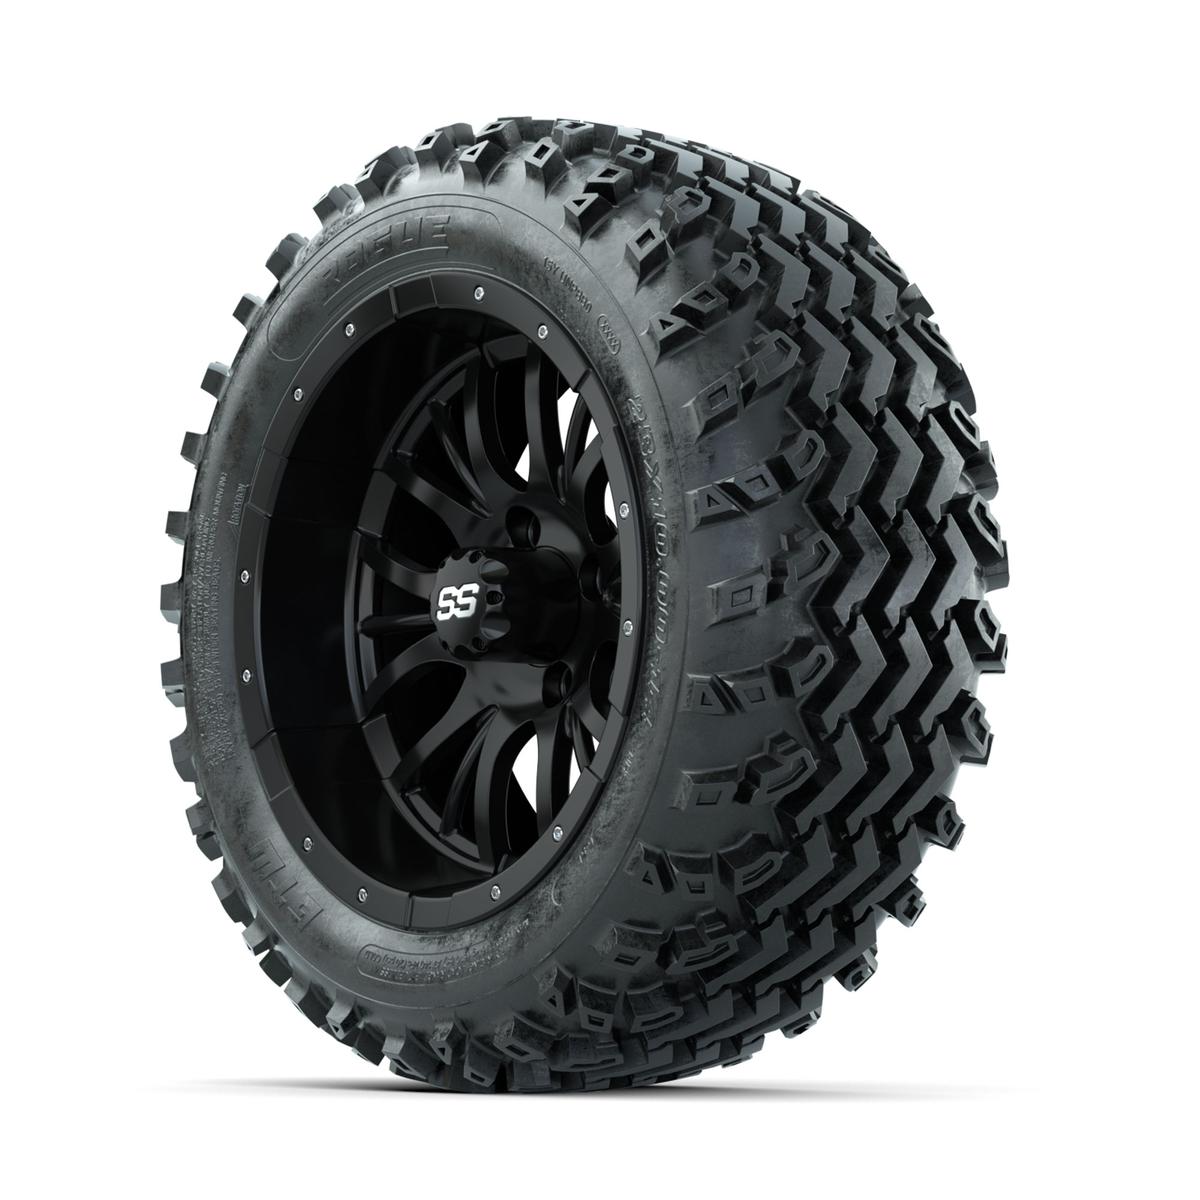 GTW Diesel Matte Black 14 in Wheels with 23x10.00-14 Rogue All Terrain Tires – Full Set